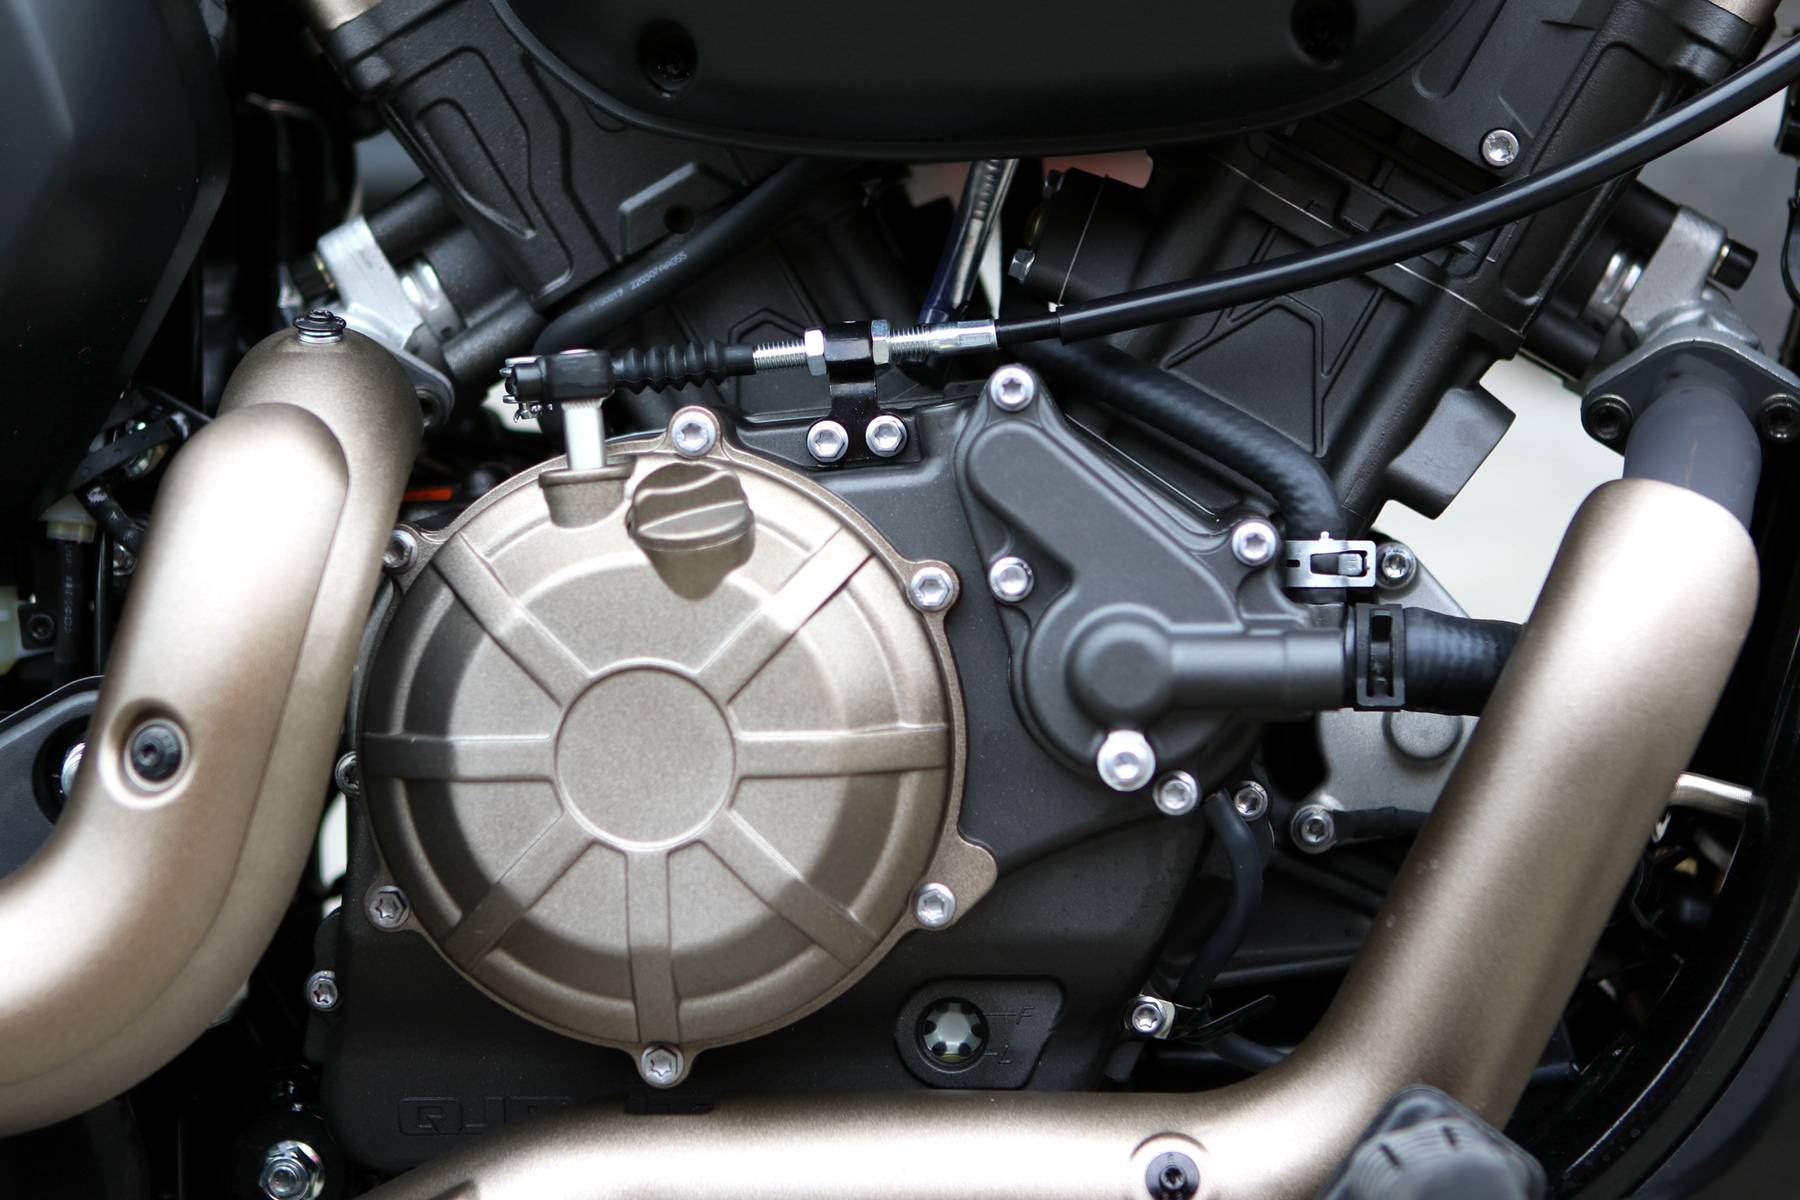 qjmotor闪300s的发动机为v型四冲程双缸,排量296cc最大马力达到30